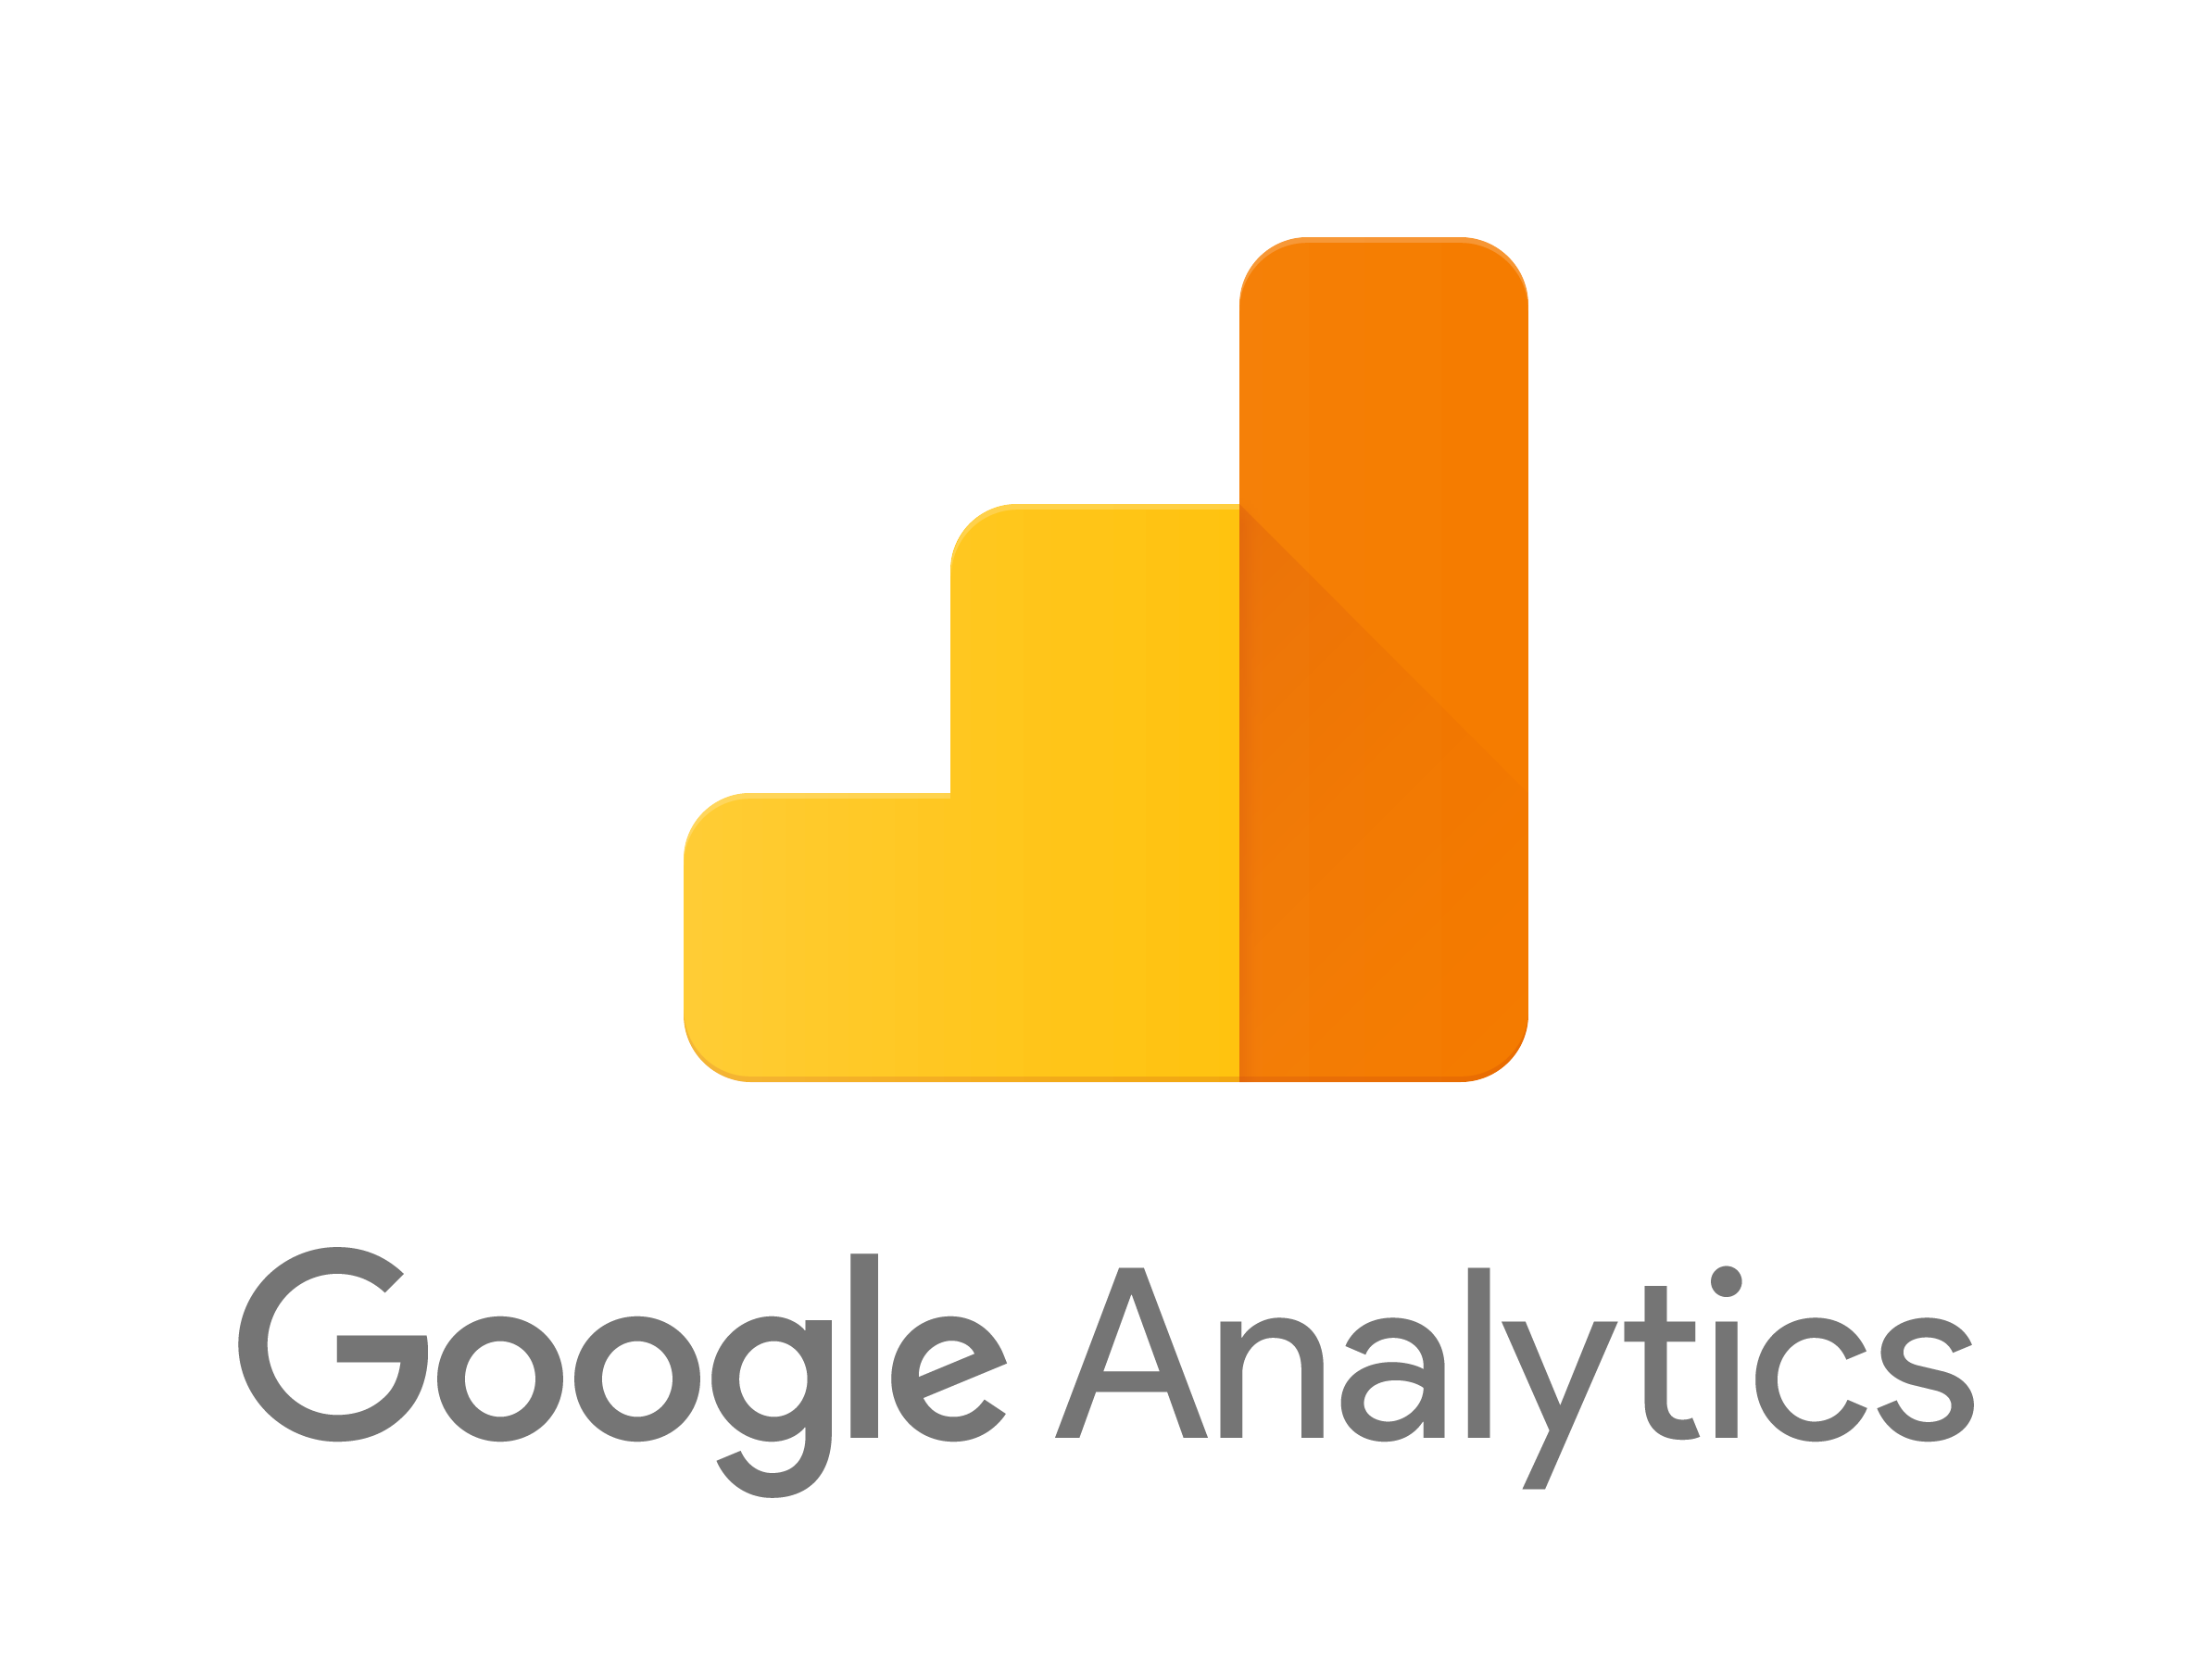 the Google Analytics logo